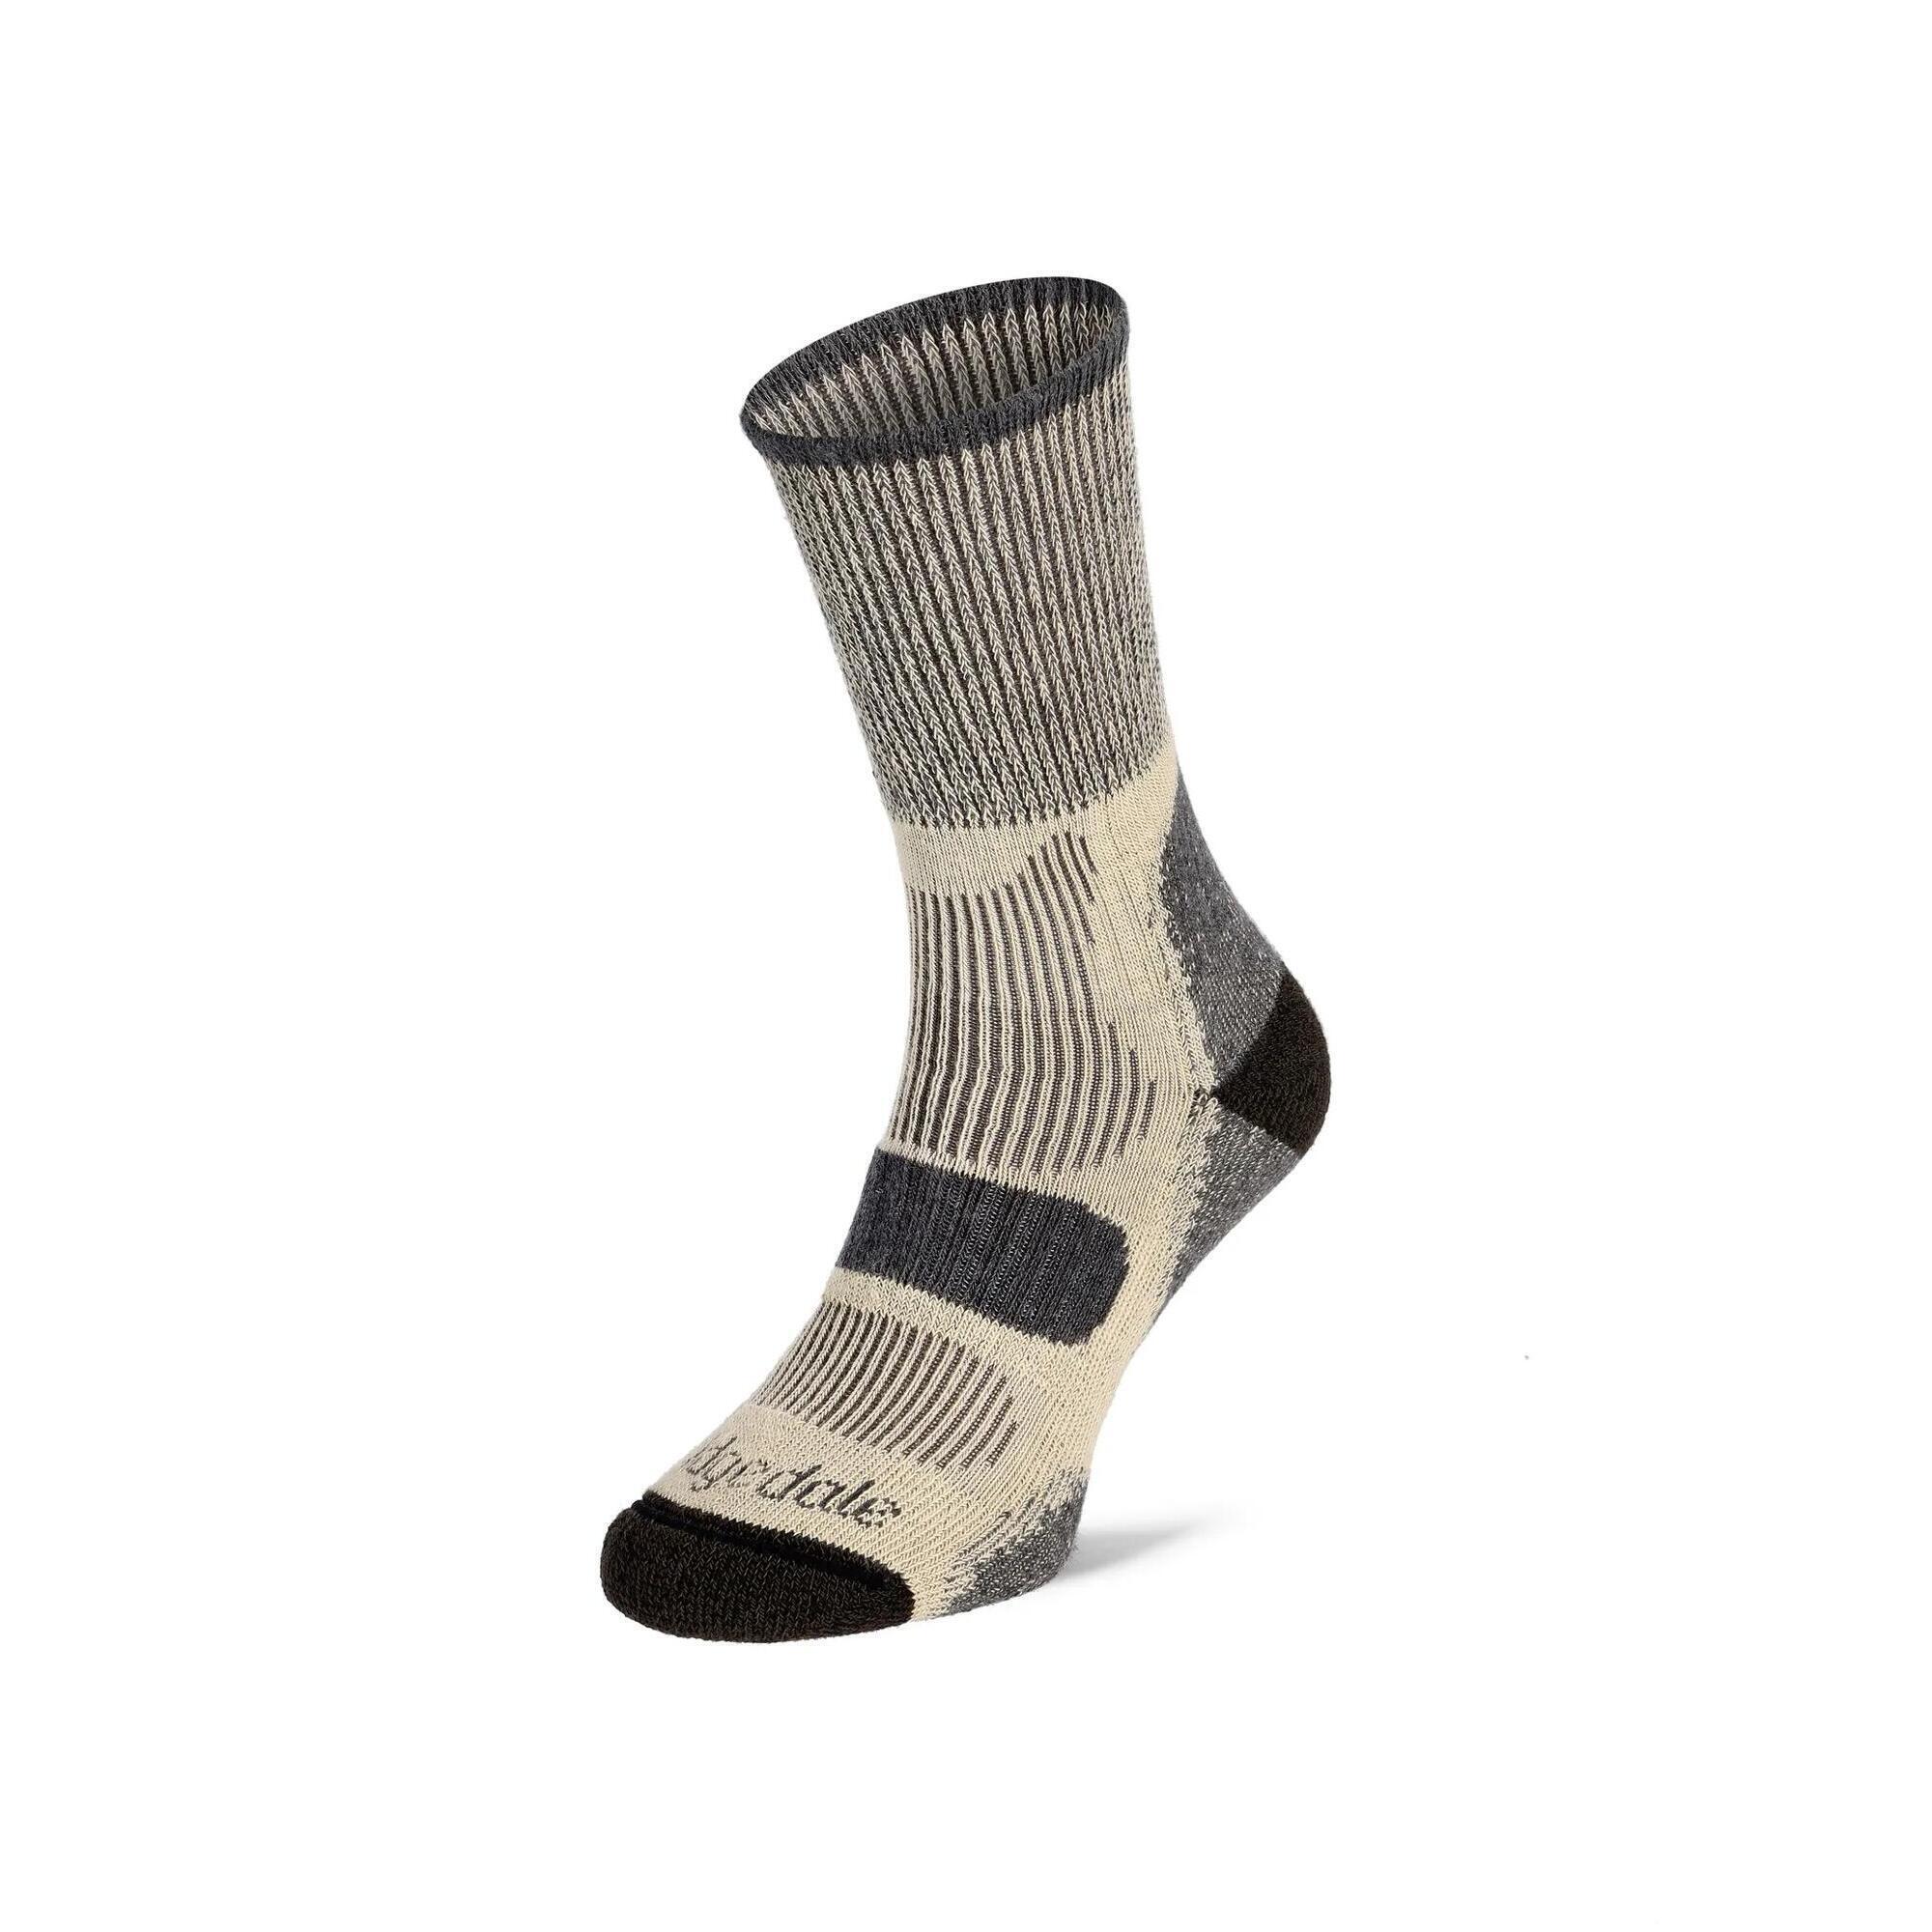 HIKE Lightweight Cotton Cool Comfort Boot Men's - Charcoal grey 1/5